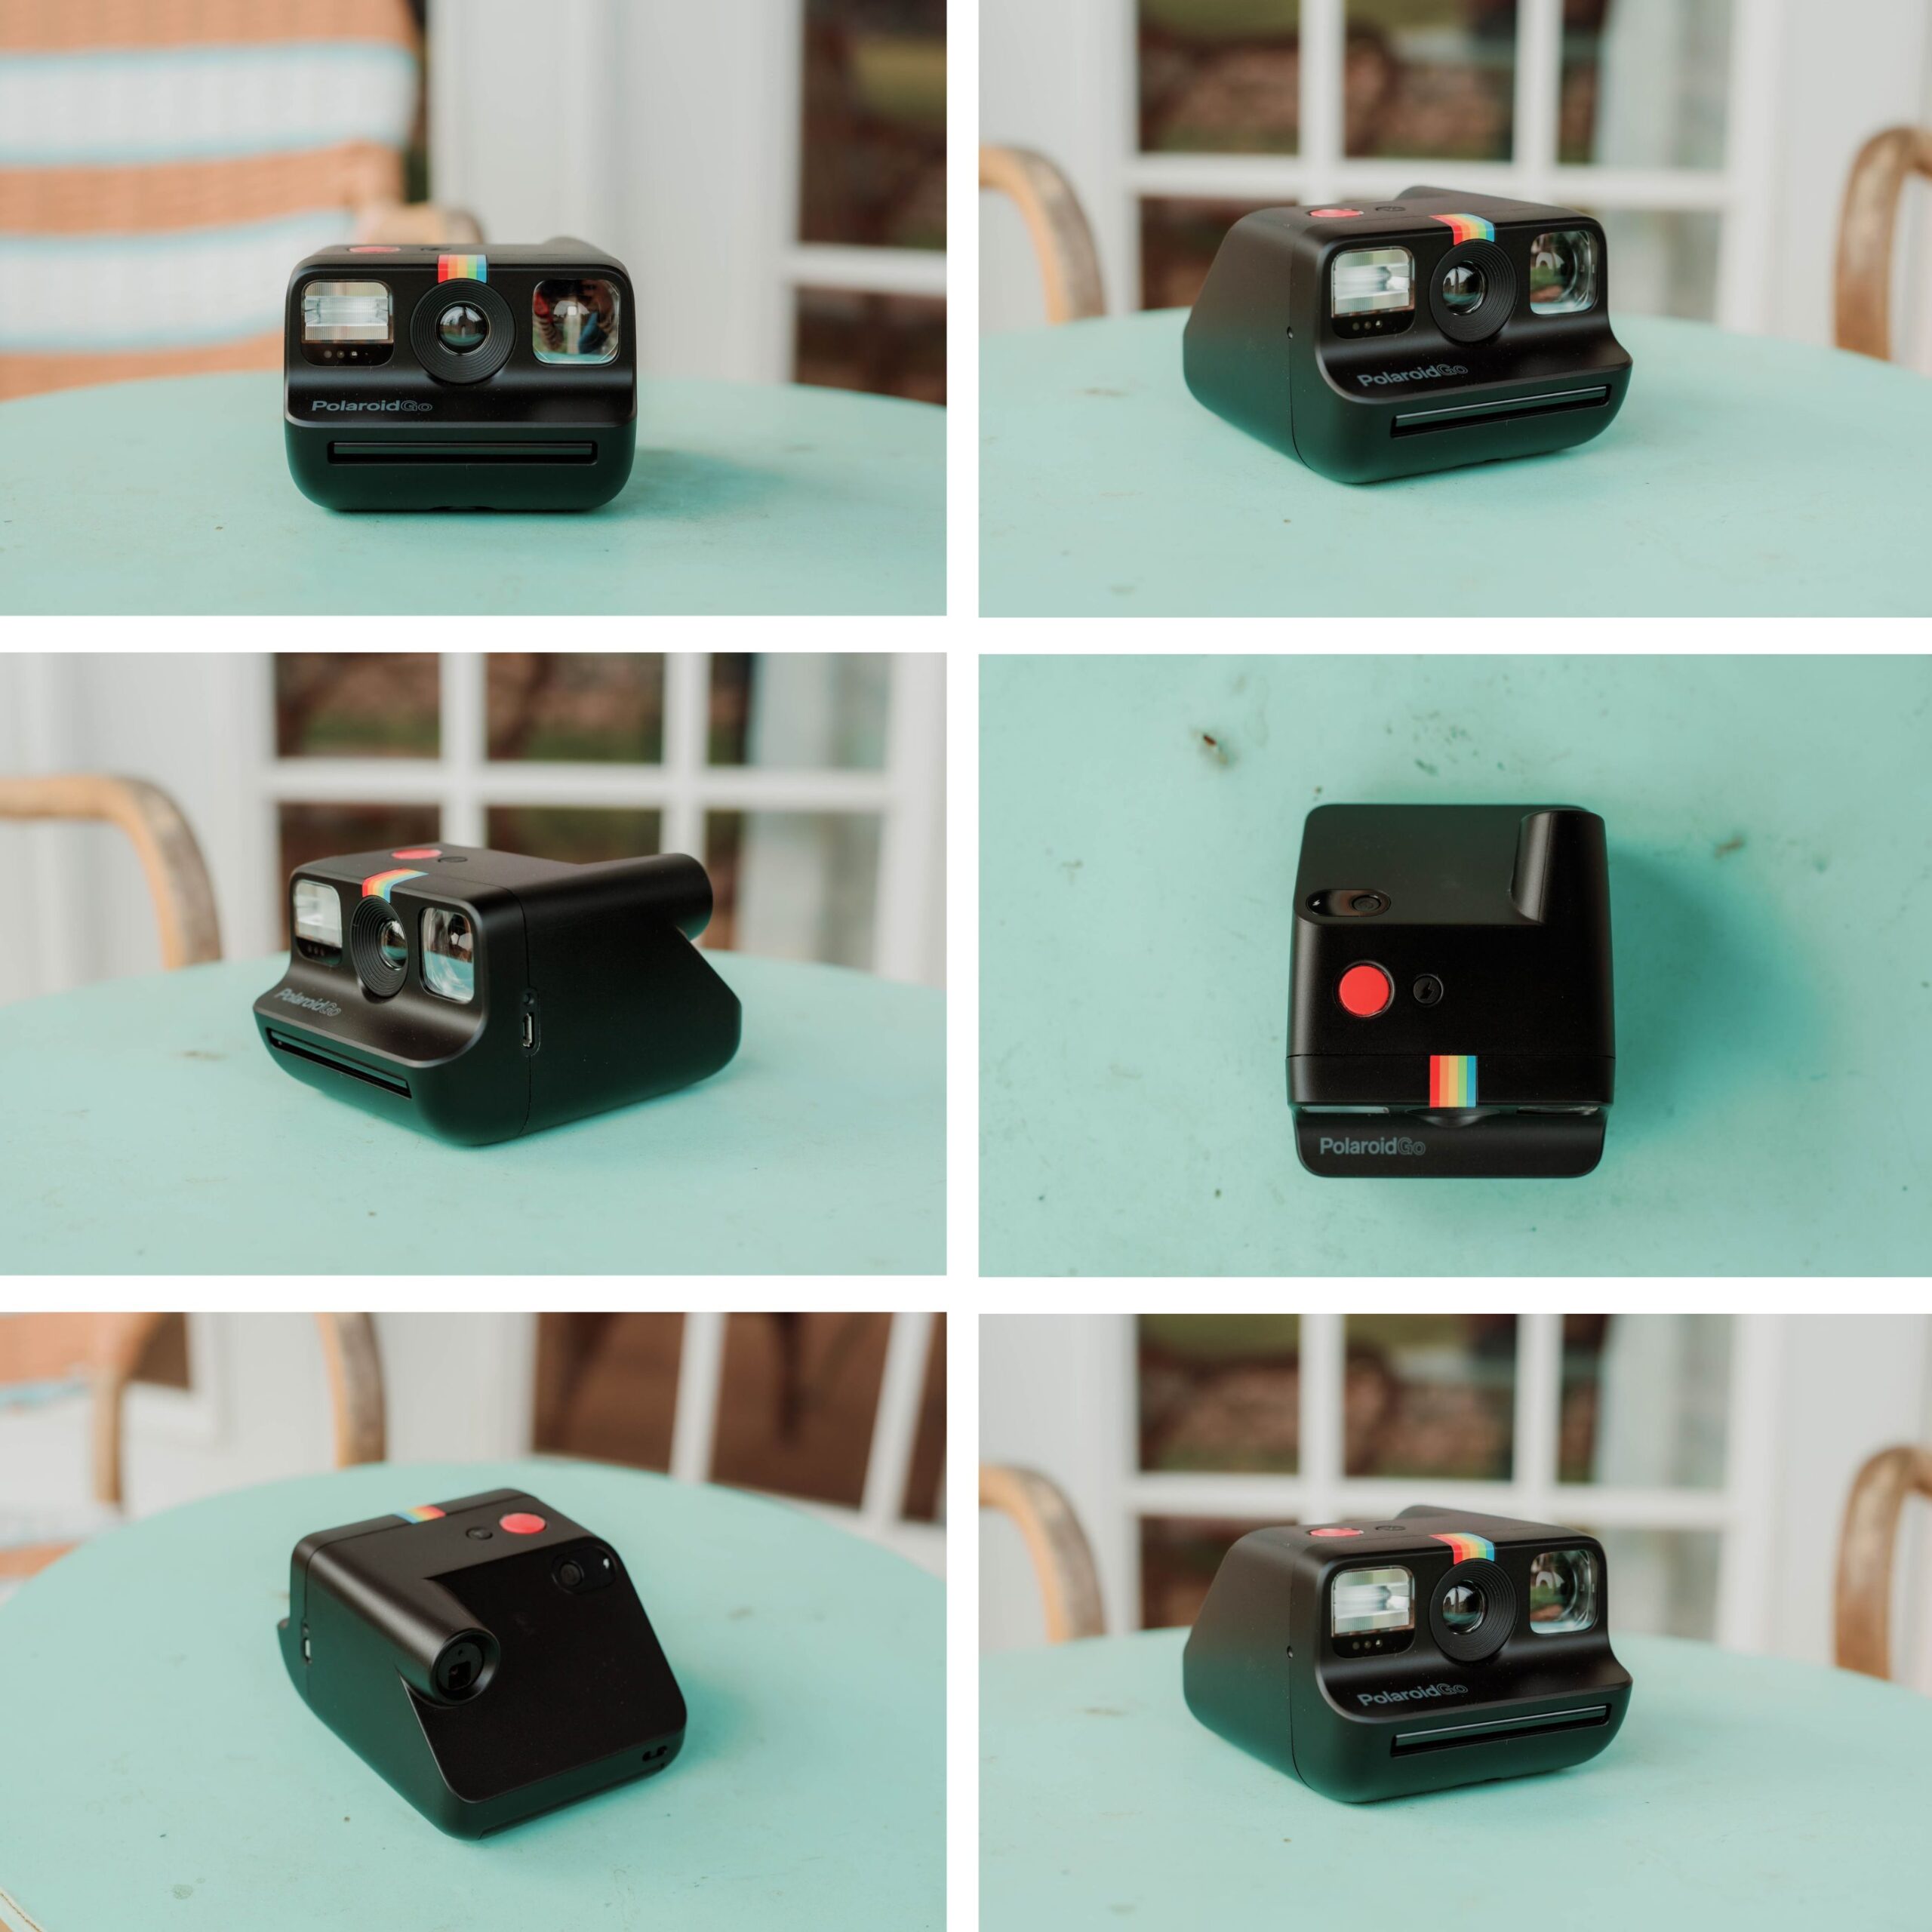 Polaroid Go Review: A Mini Instant Film Camera from Polaroid